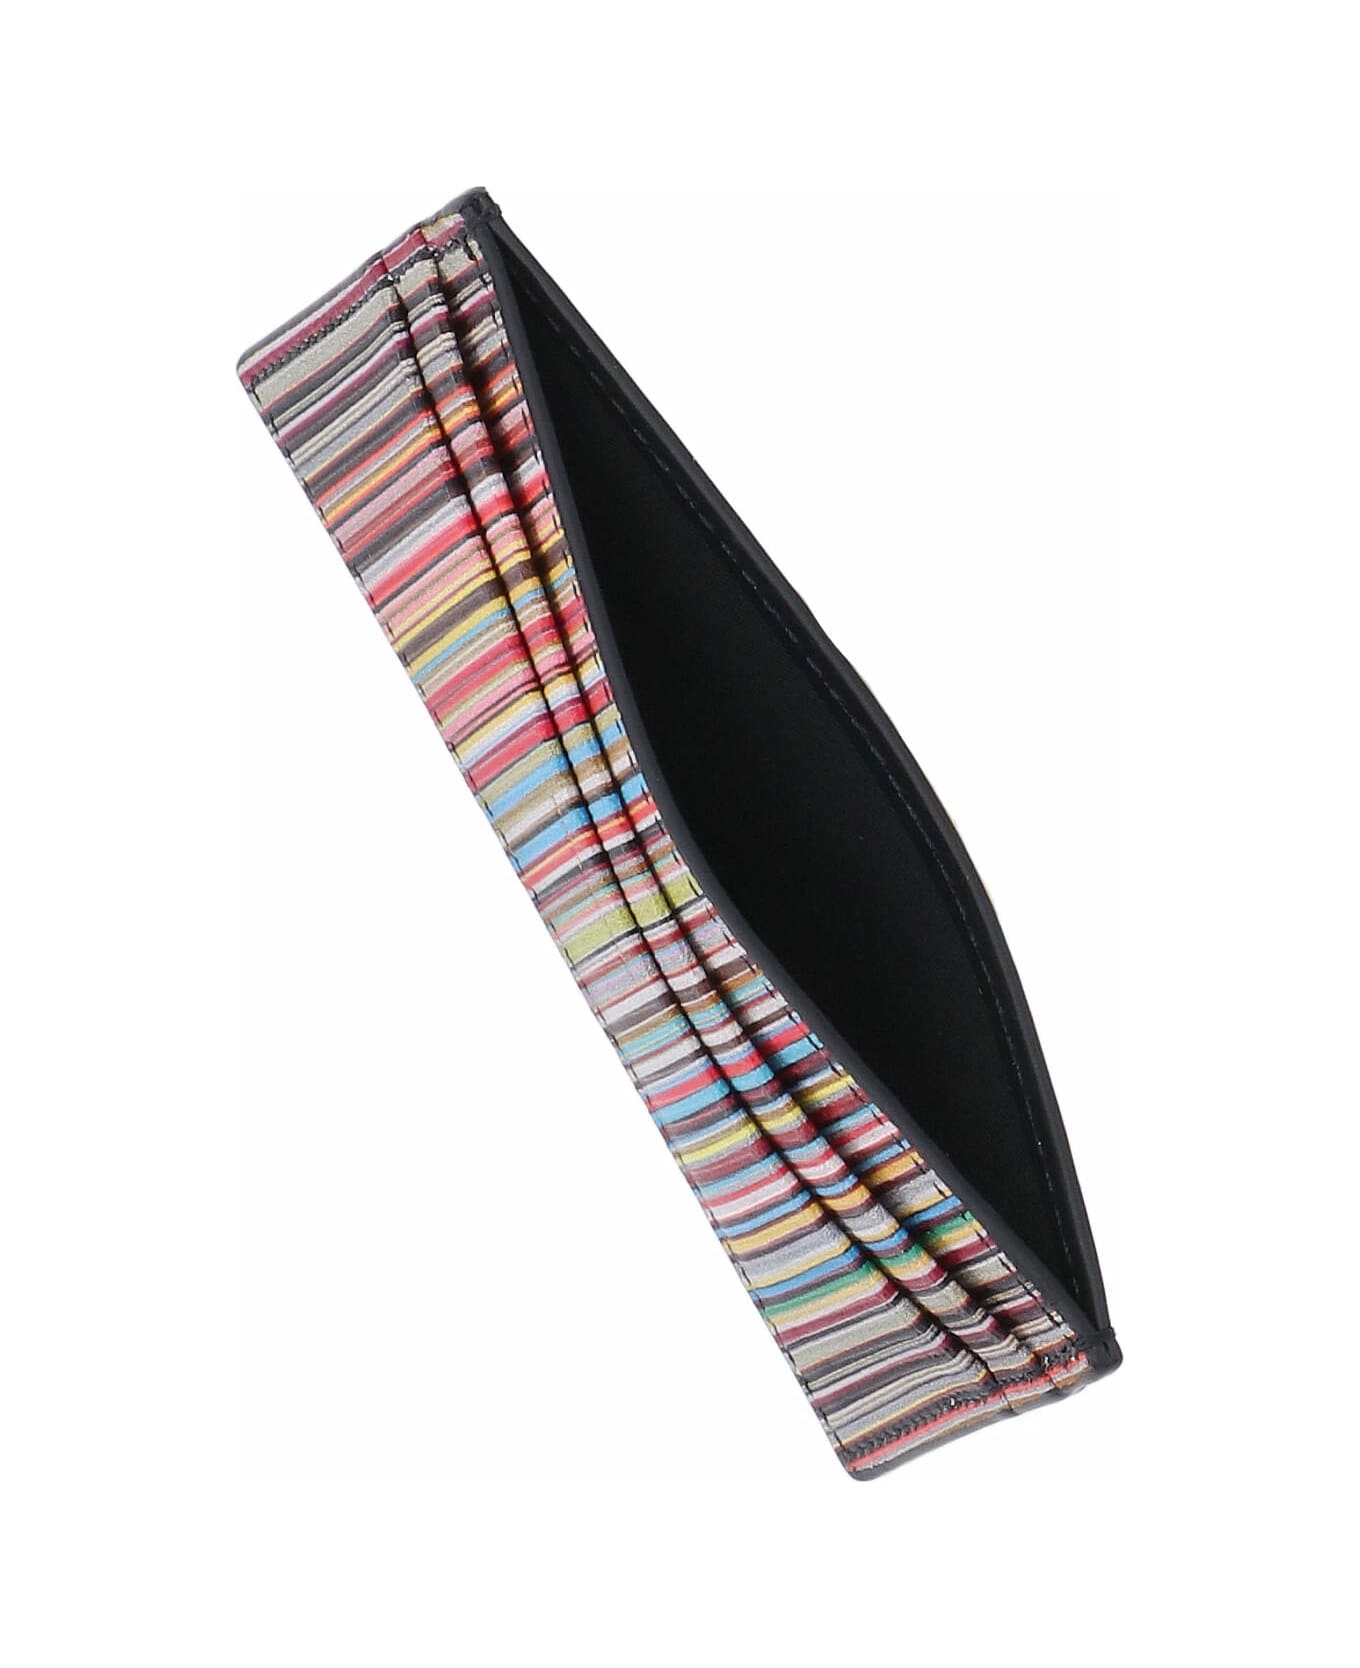 Paul Smith 'signature Stripe' Card Holder - Black   財布